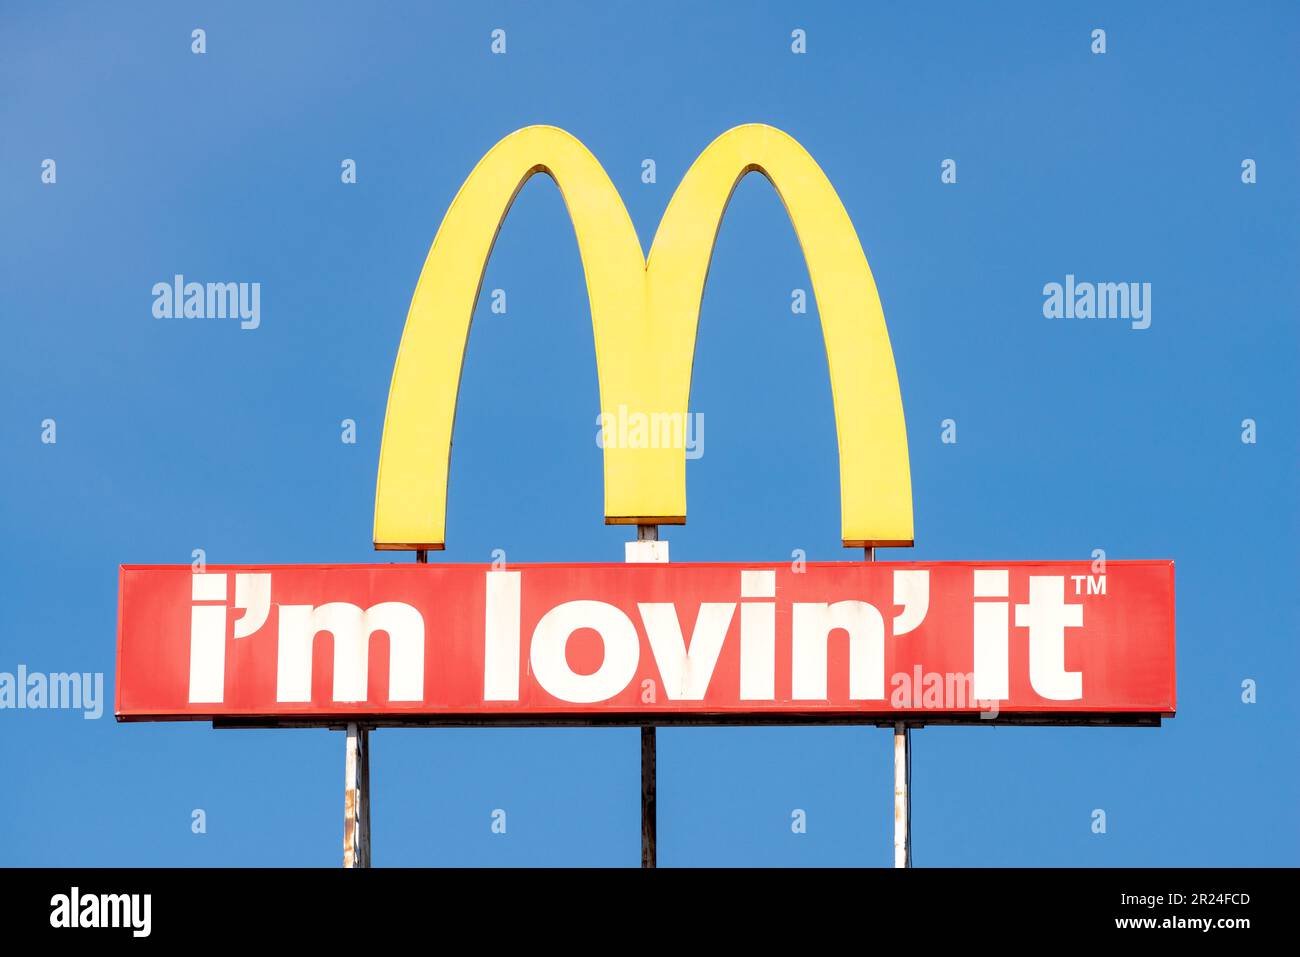 McDonald's logo arches sign and I'm Lovin' It slogan against blue sky ...